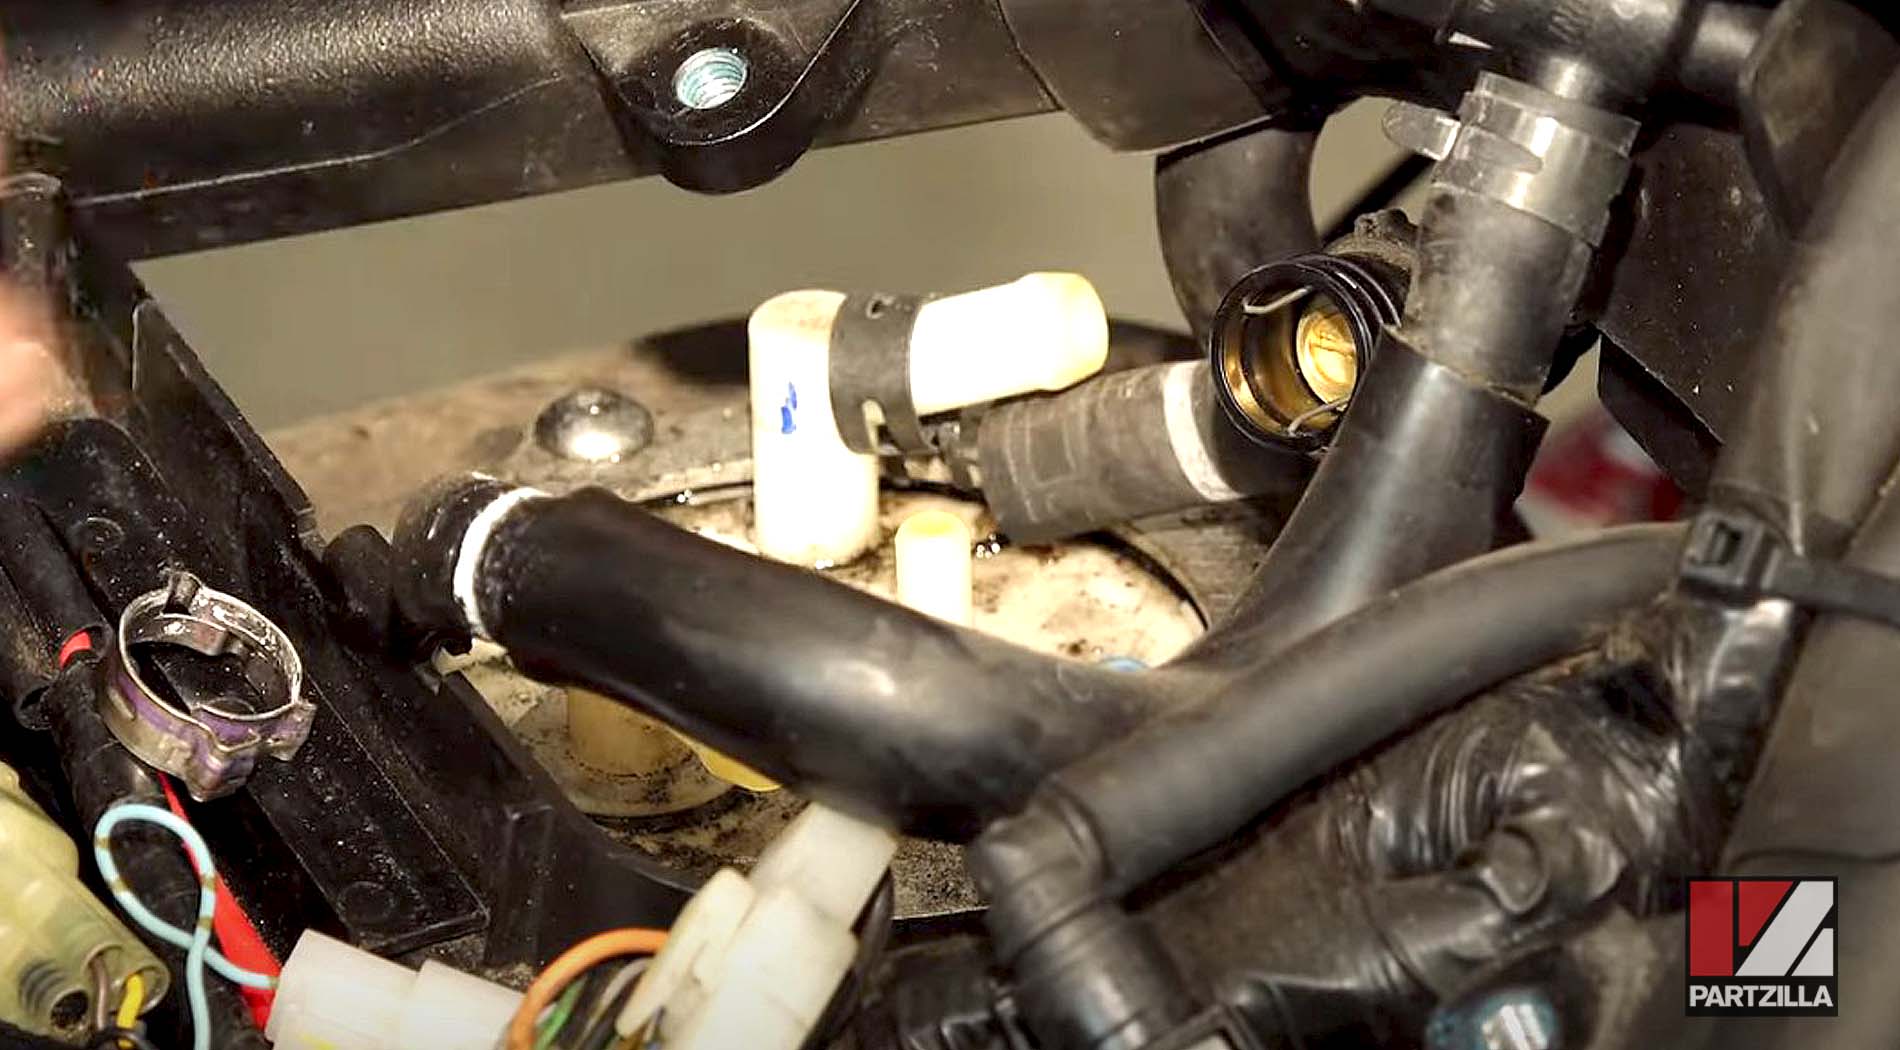 2008 Yamaha Raider motorcycle fuel pump change disconnect hoses